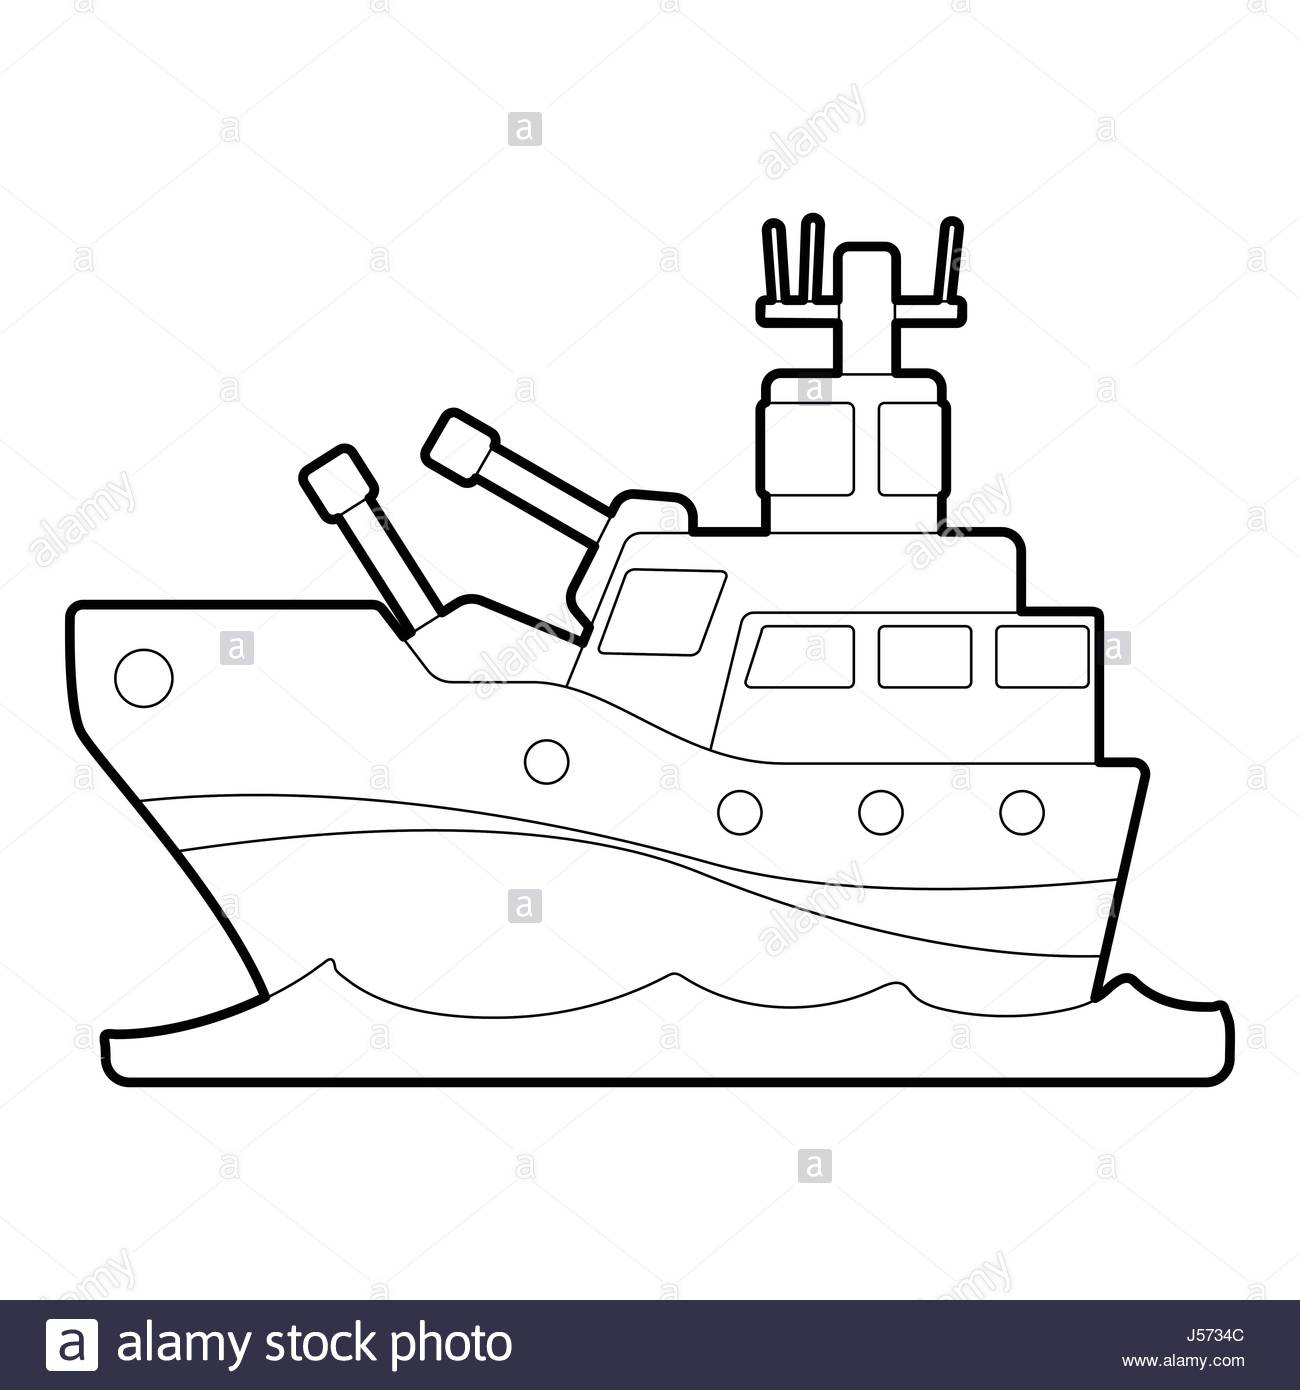 Battleship icons | Noun Project